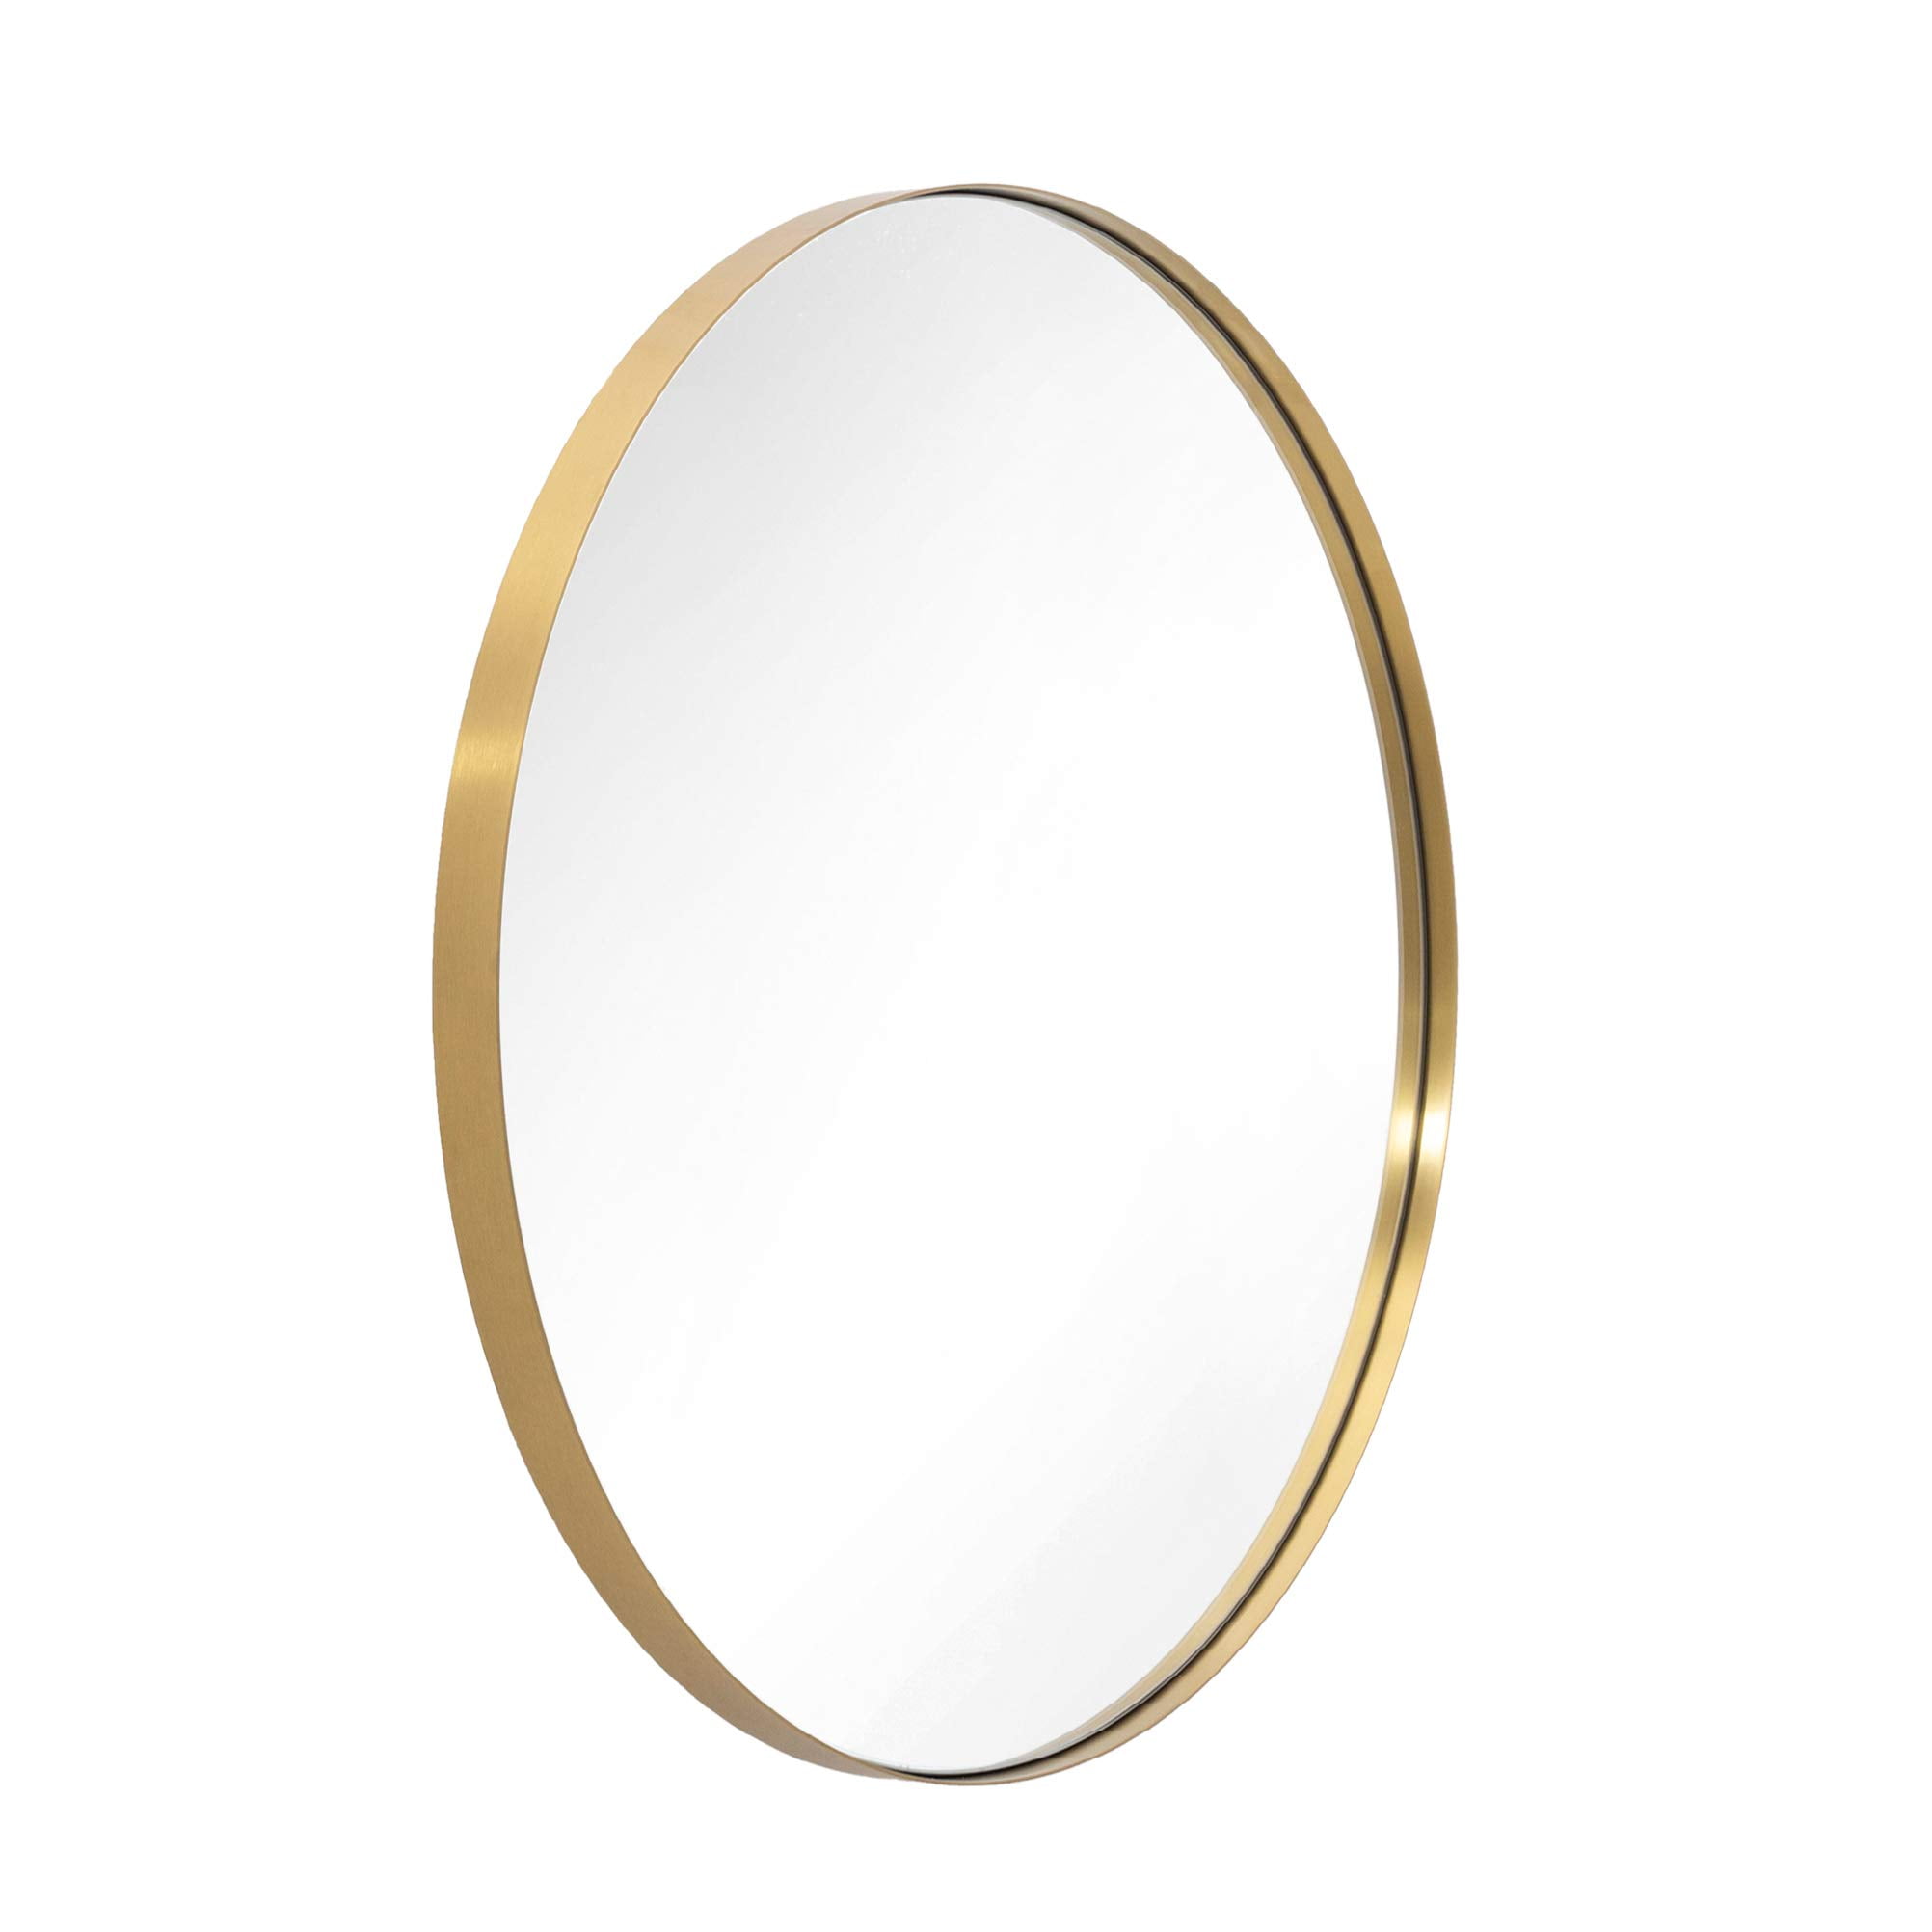 Andy Star Wall Mirror For Bathroom 24, Oval Gold Mirror For Bathroom